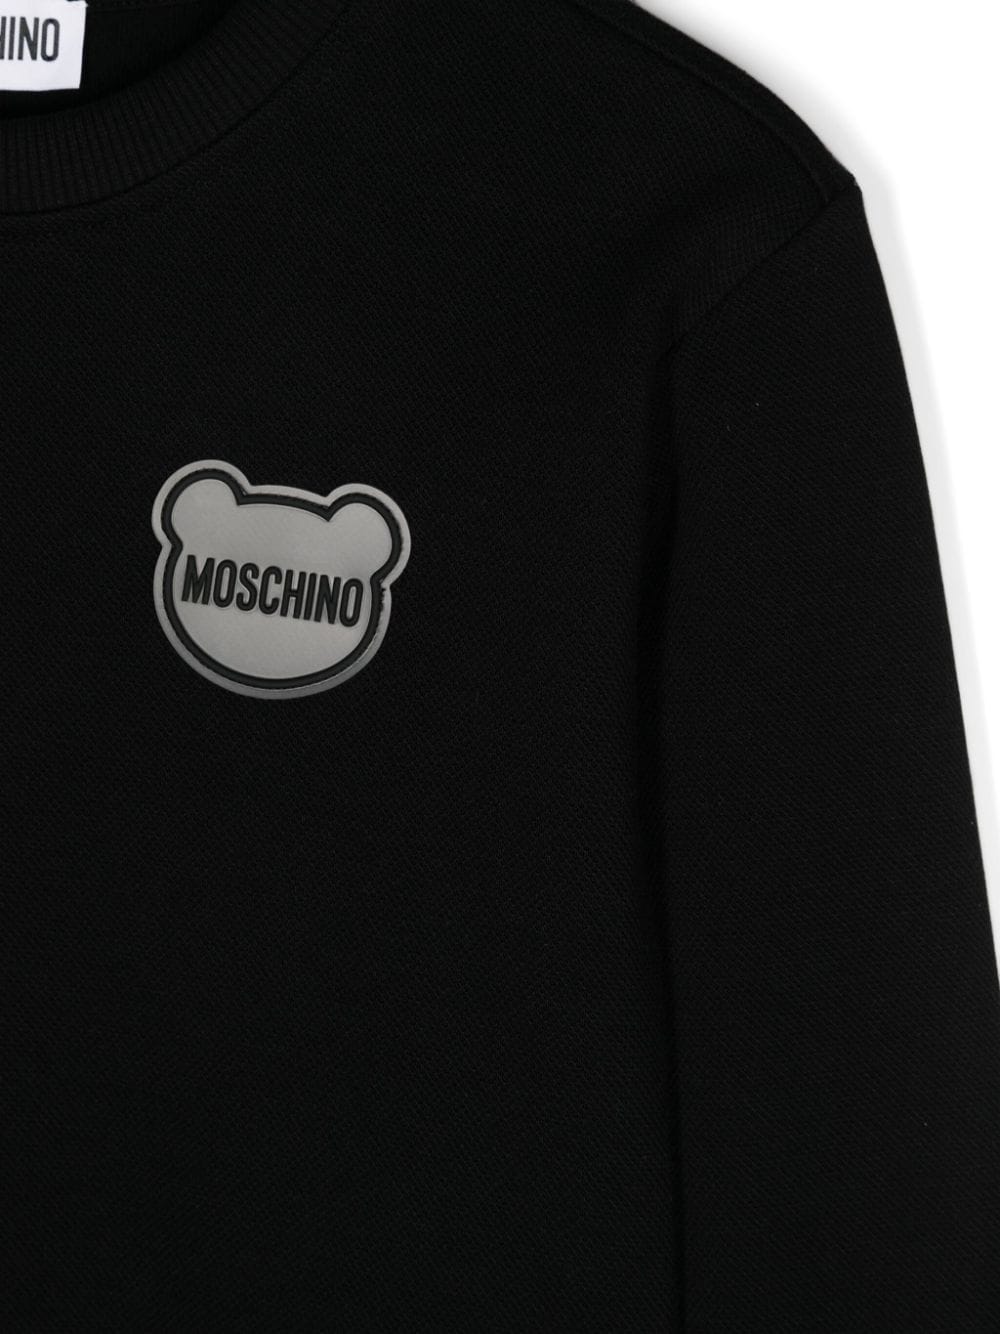 Unisex black cotton sweatshirt